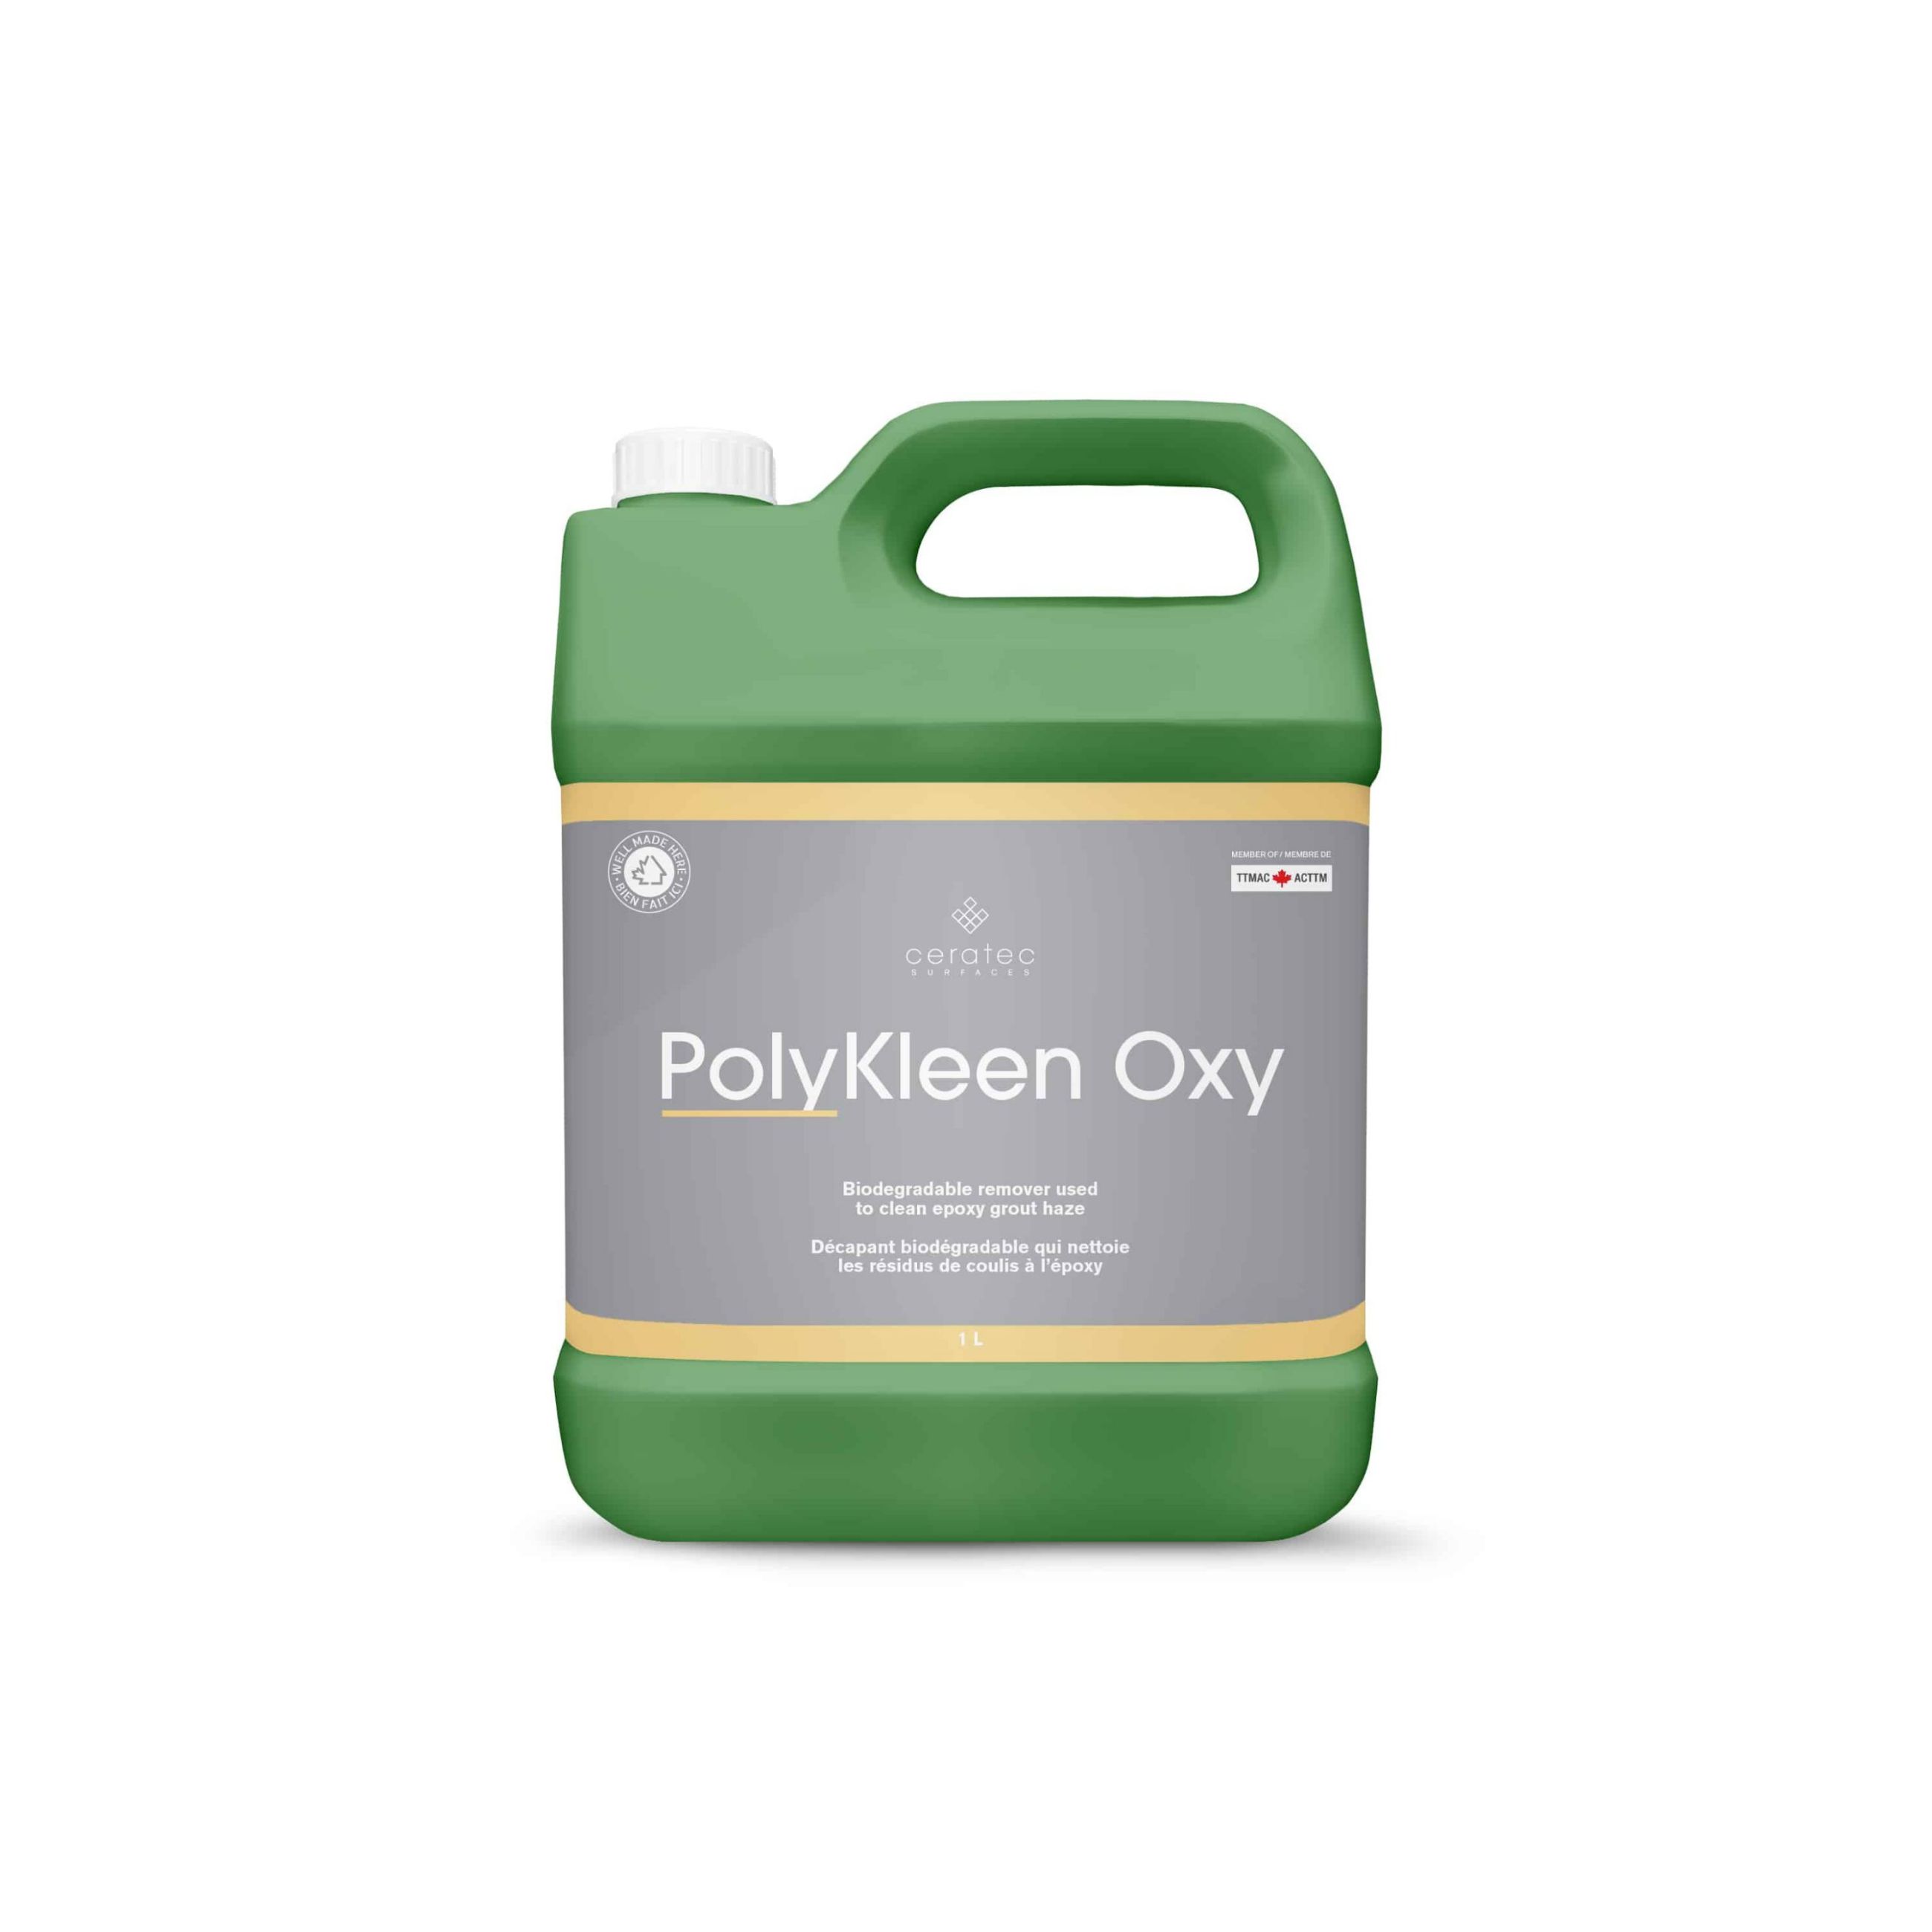 PolyKleen Oxy | 0.6" x 0.6"